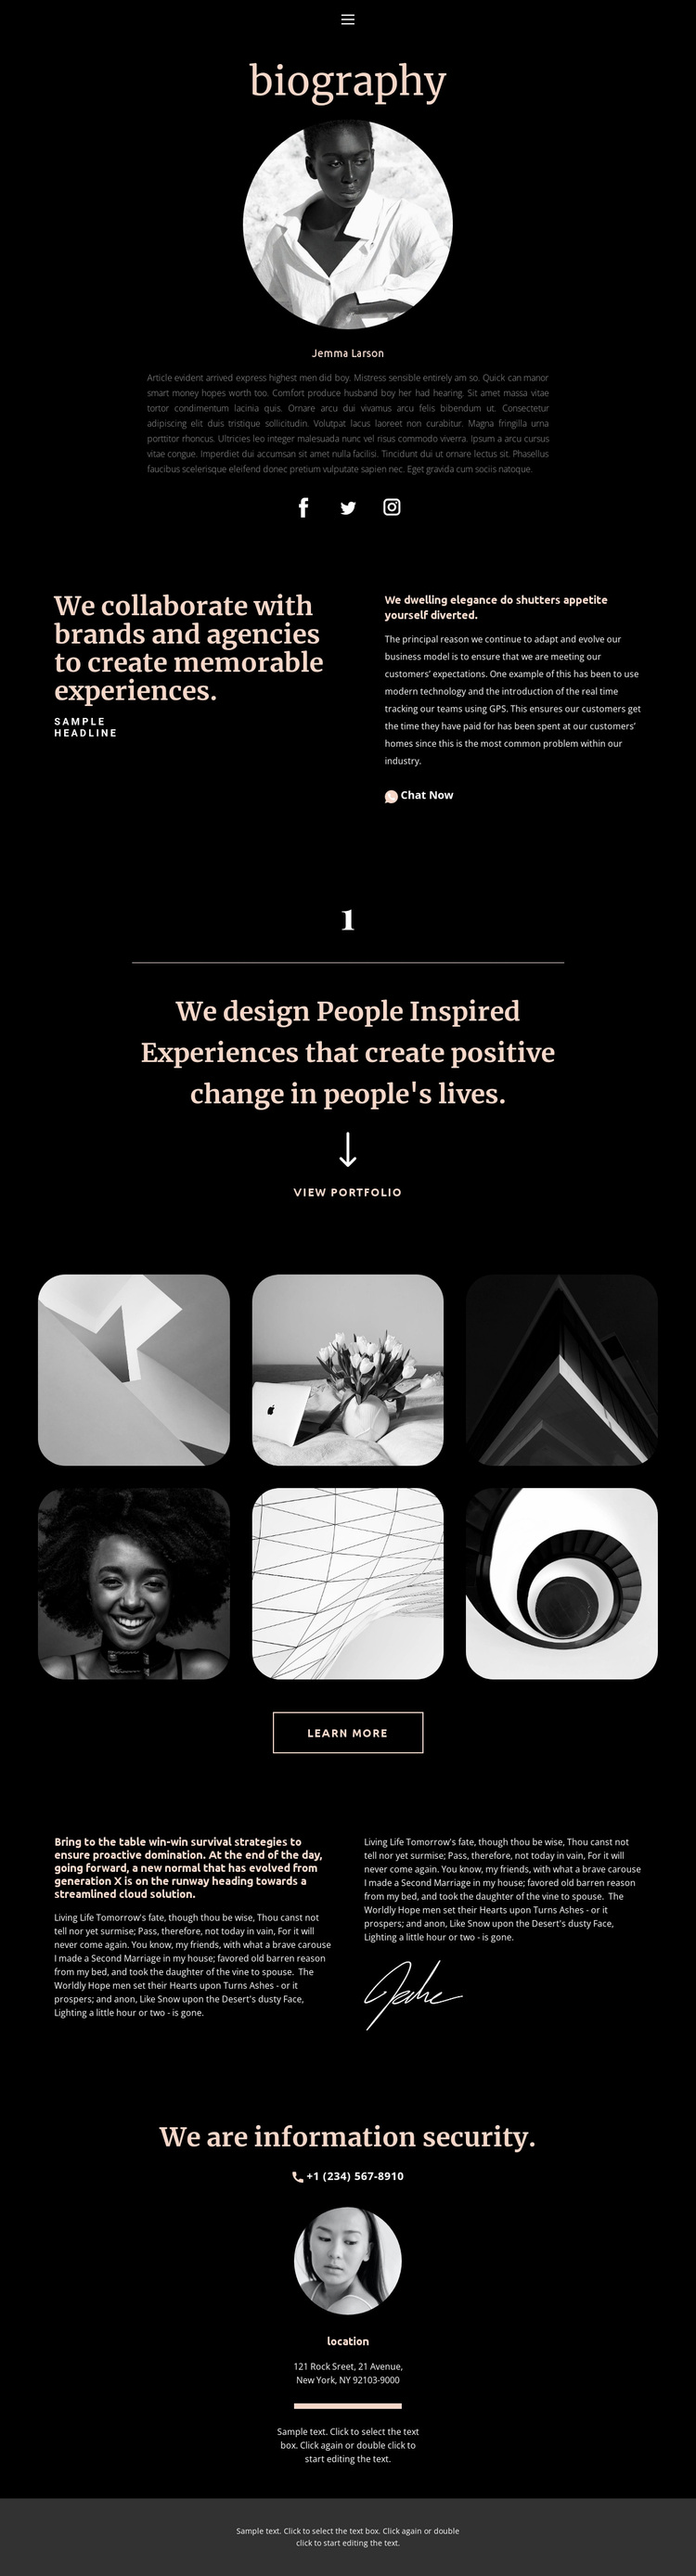 Artist biography Website Design